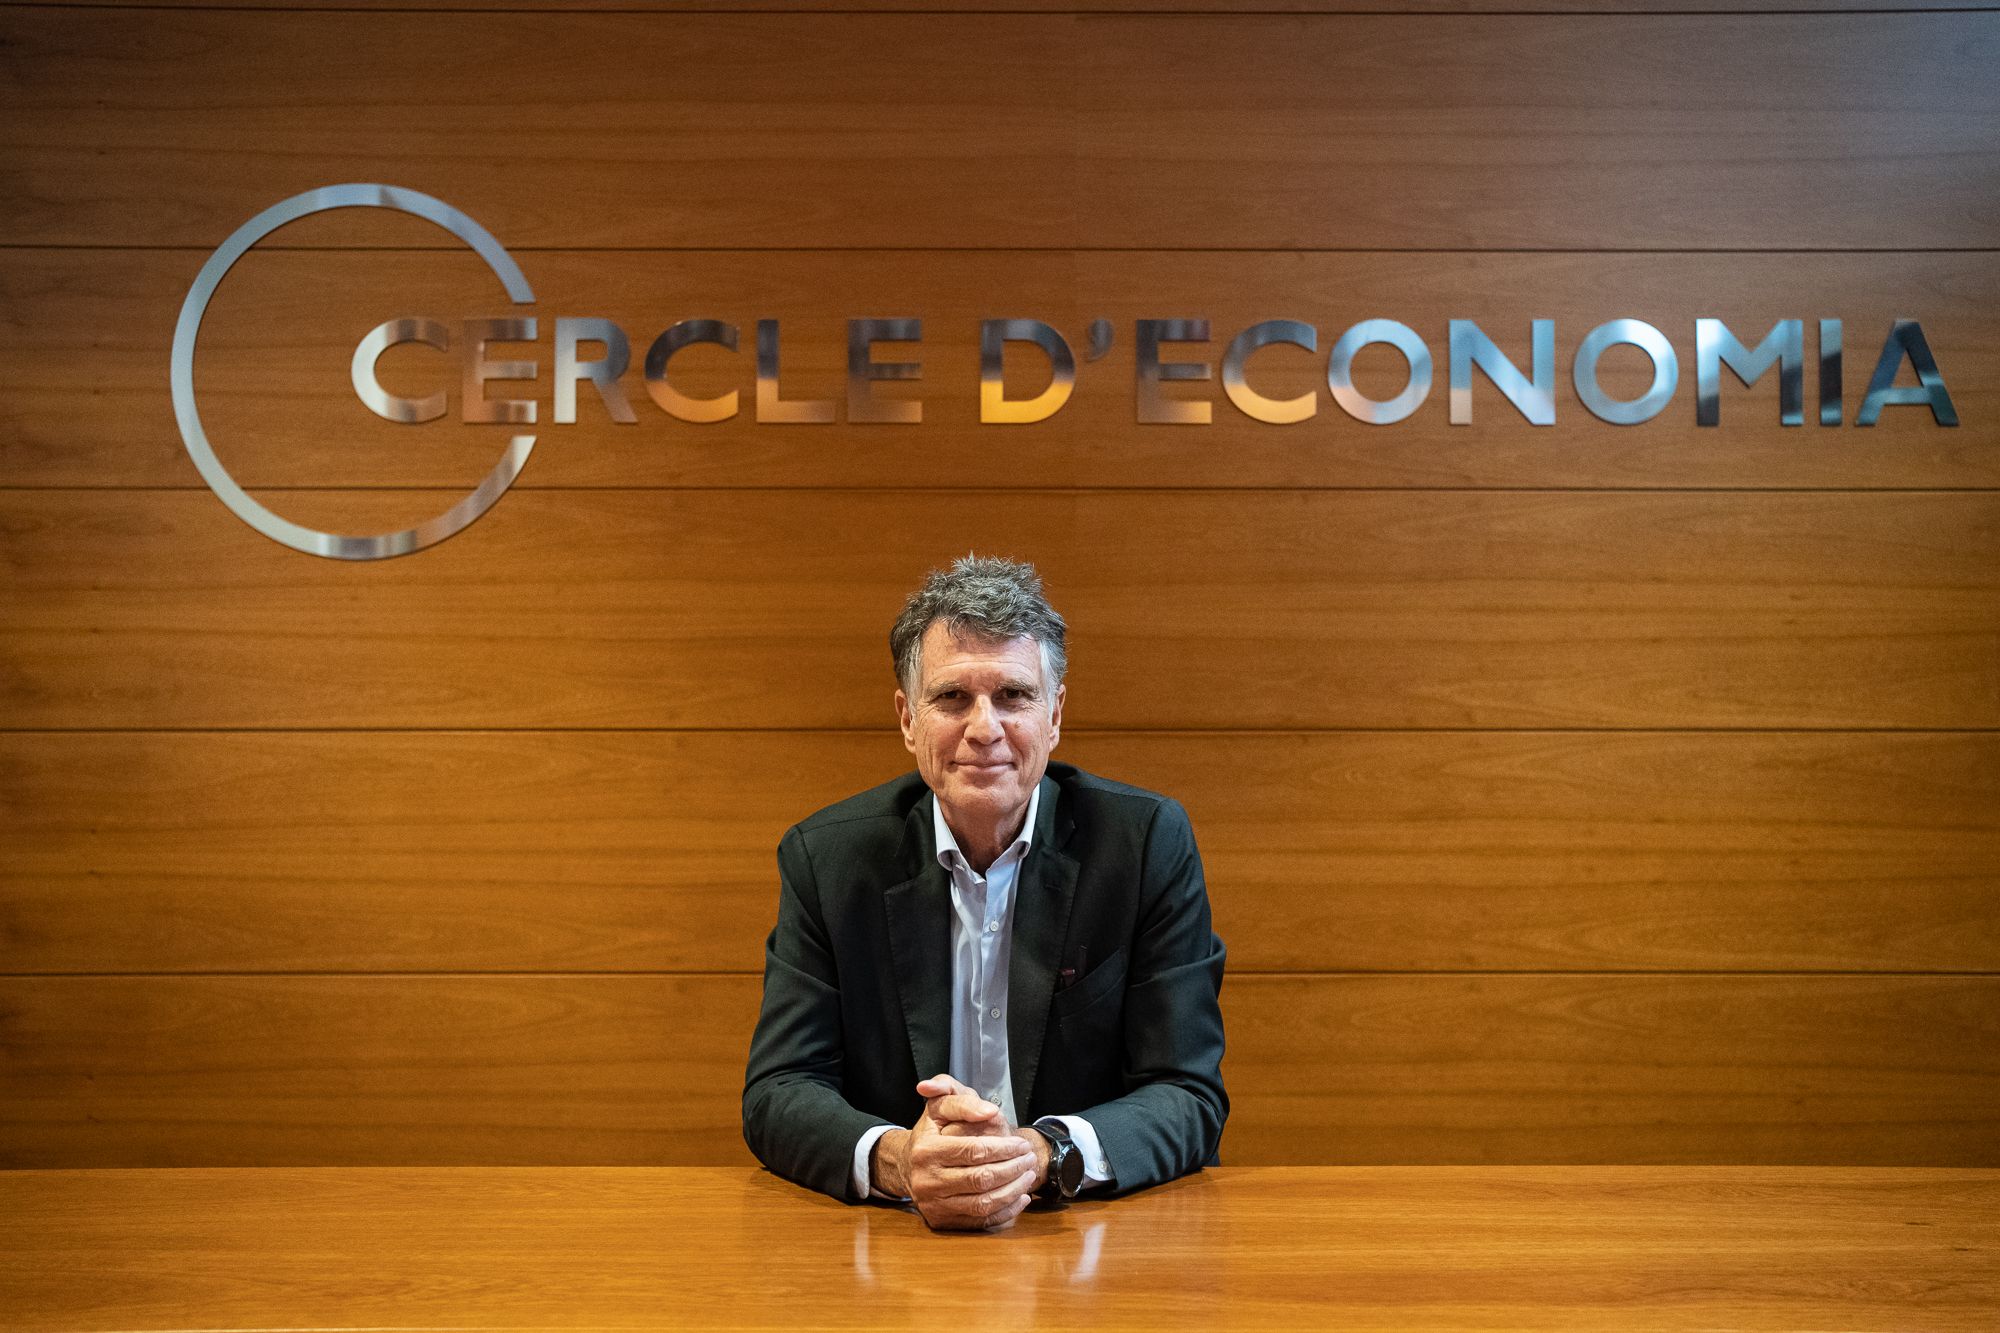  Jaume Guardiola, presidente del Cercle d'Economia | Mireia Comas